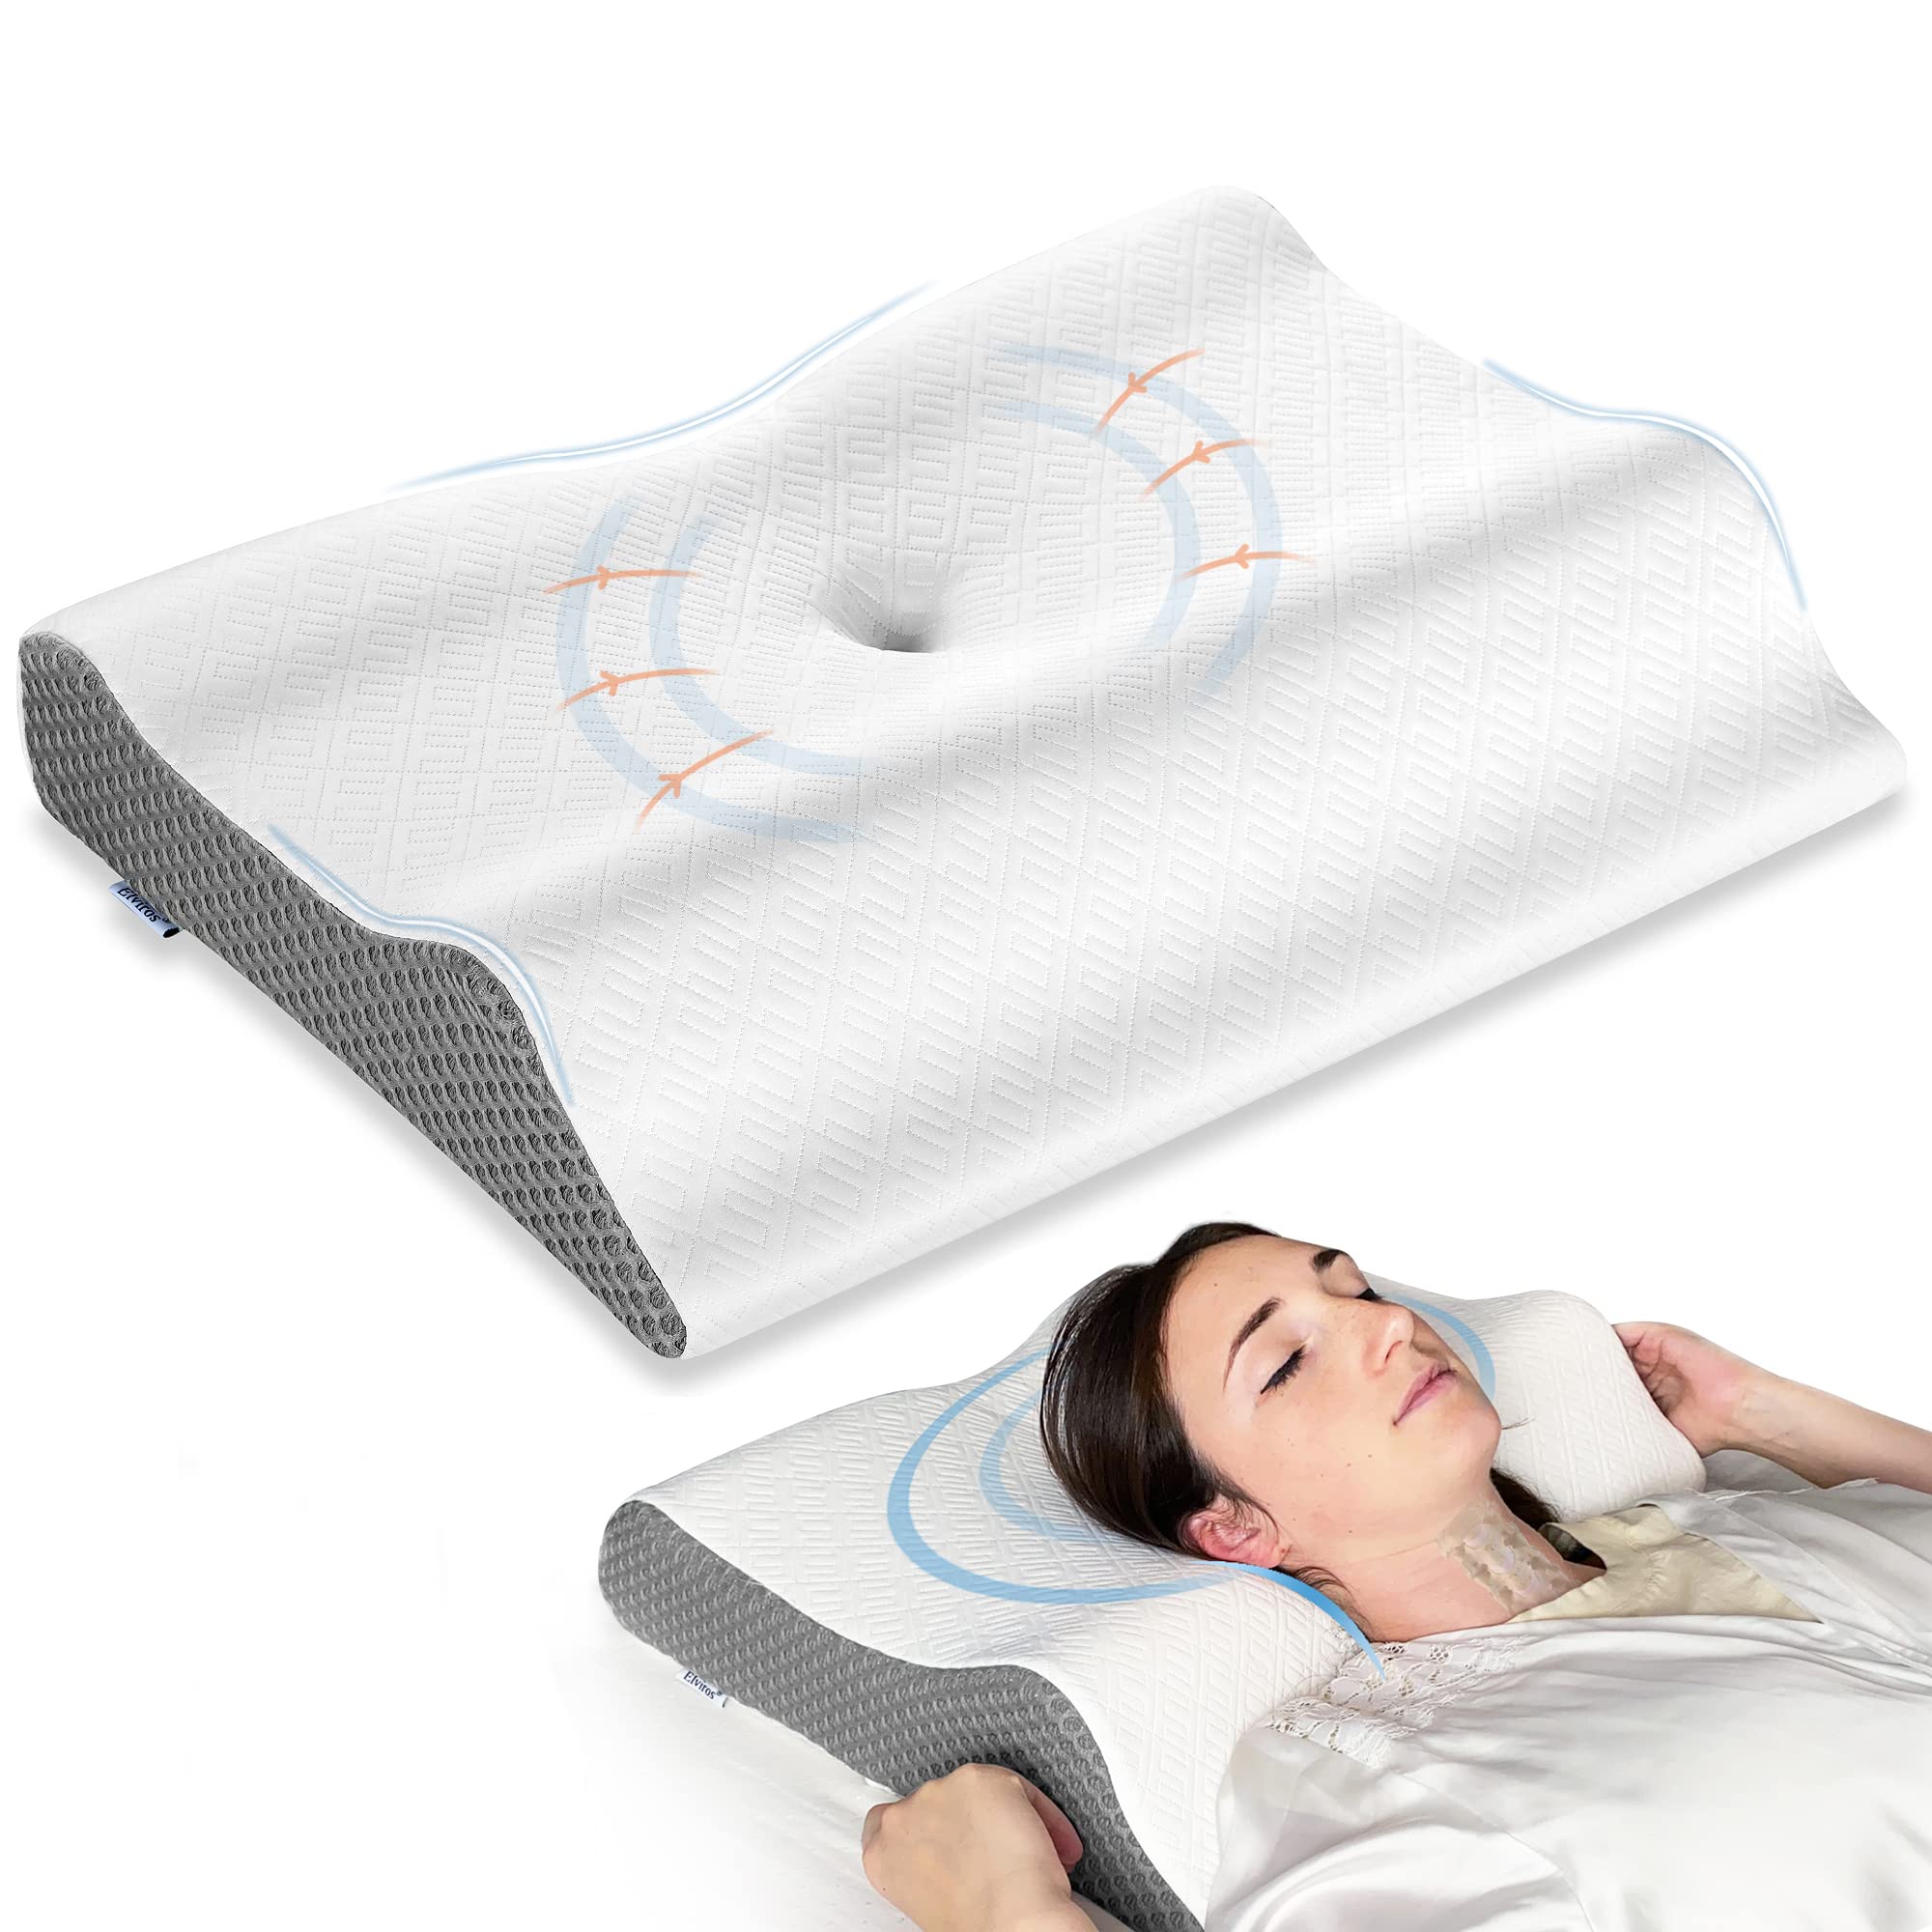 PainX Orthopedic Pillow – Doctor Pillow